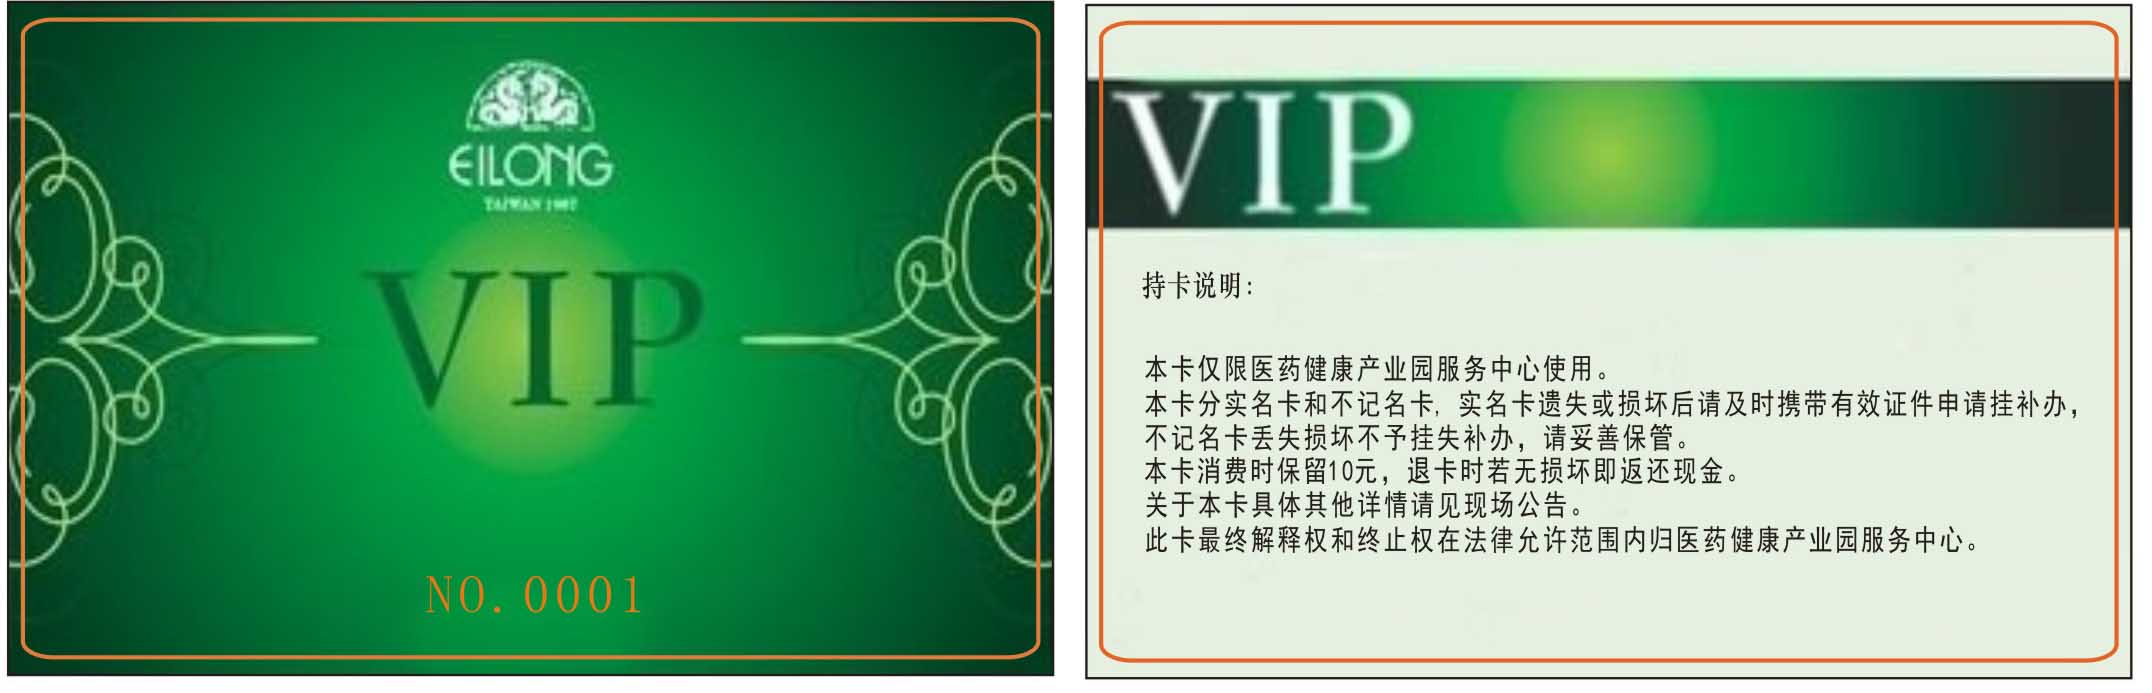 VIP印刷卡彩卡确认稿件